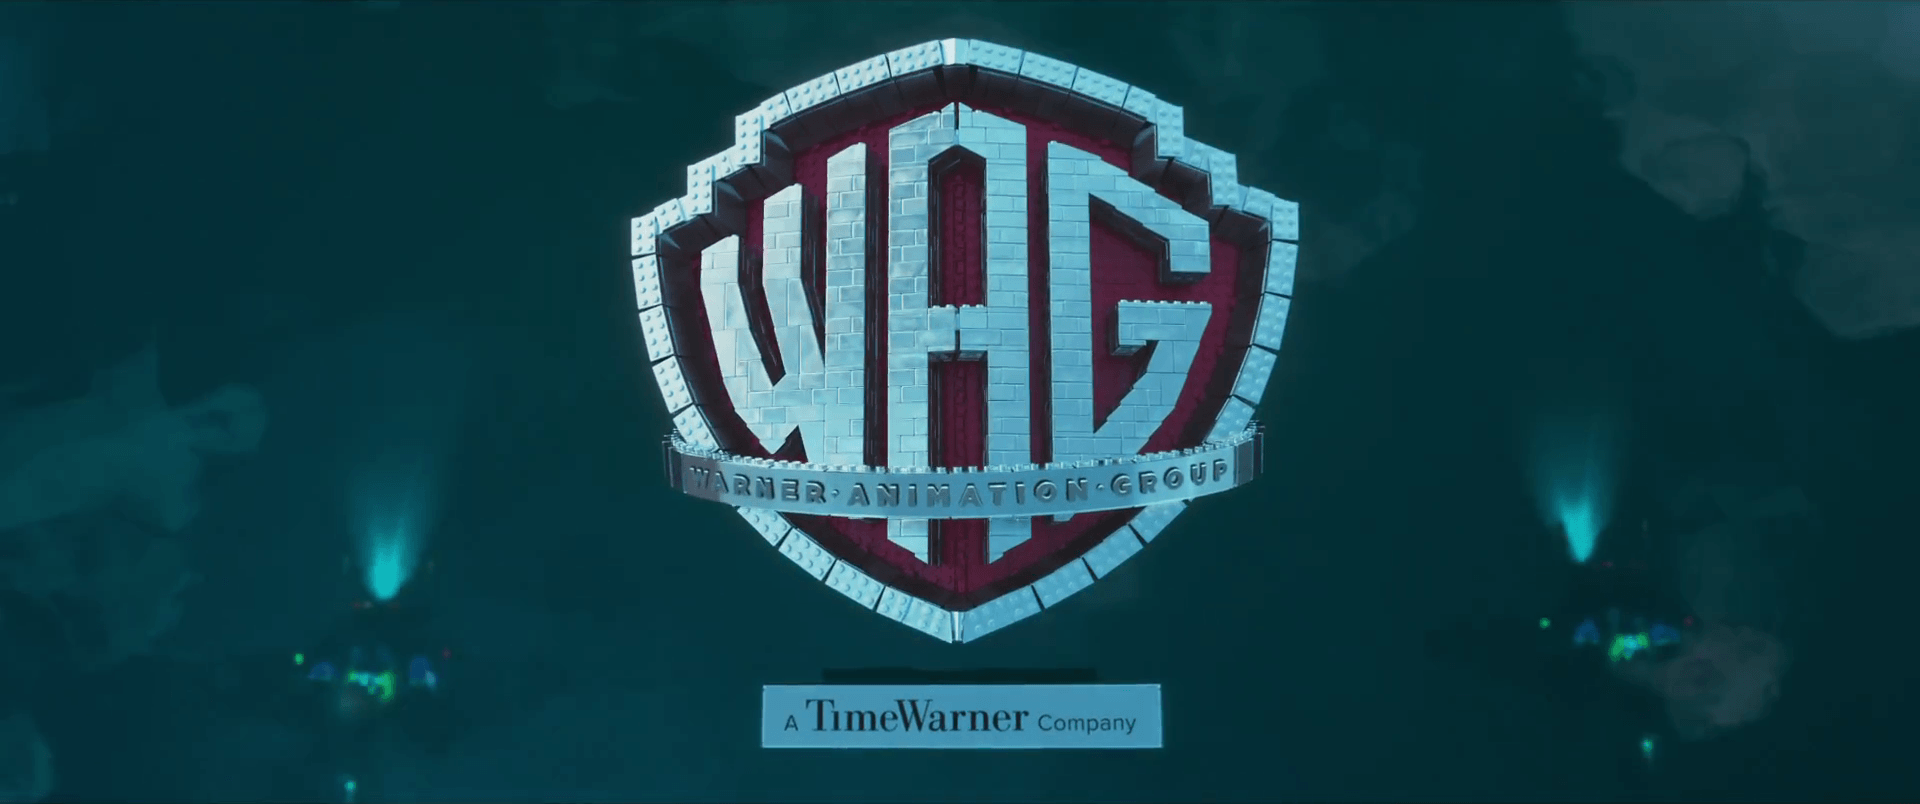 Warner Animation Group Logo - Image - Warner animation group logo lego ninjago.png | Adam's Dream ...